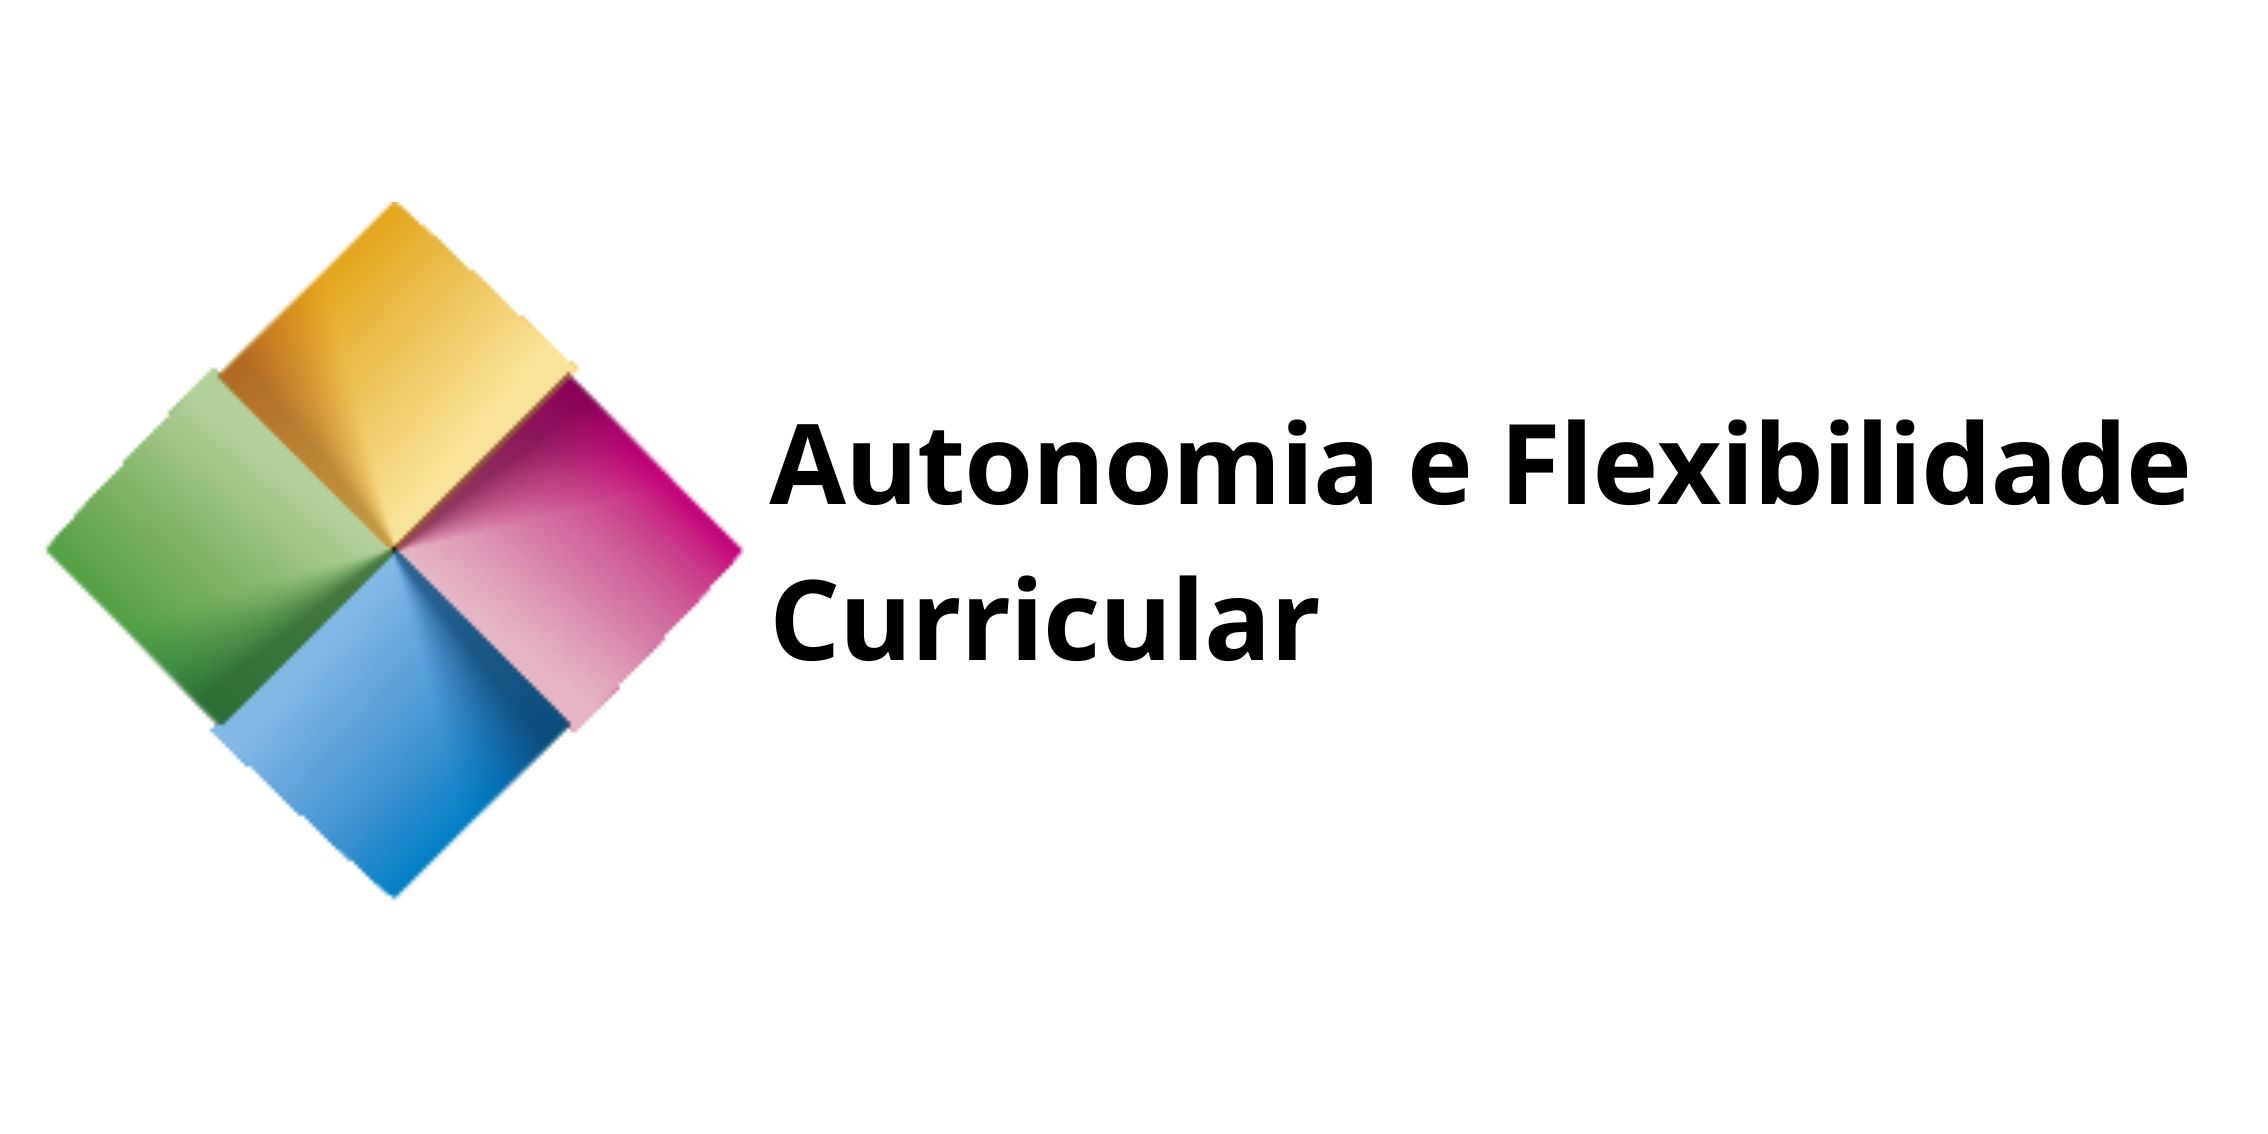 Autonomia e Flexibilidade Curricular